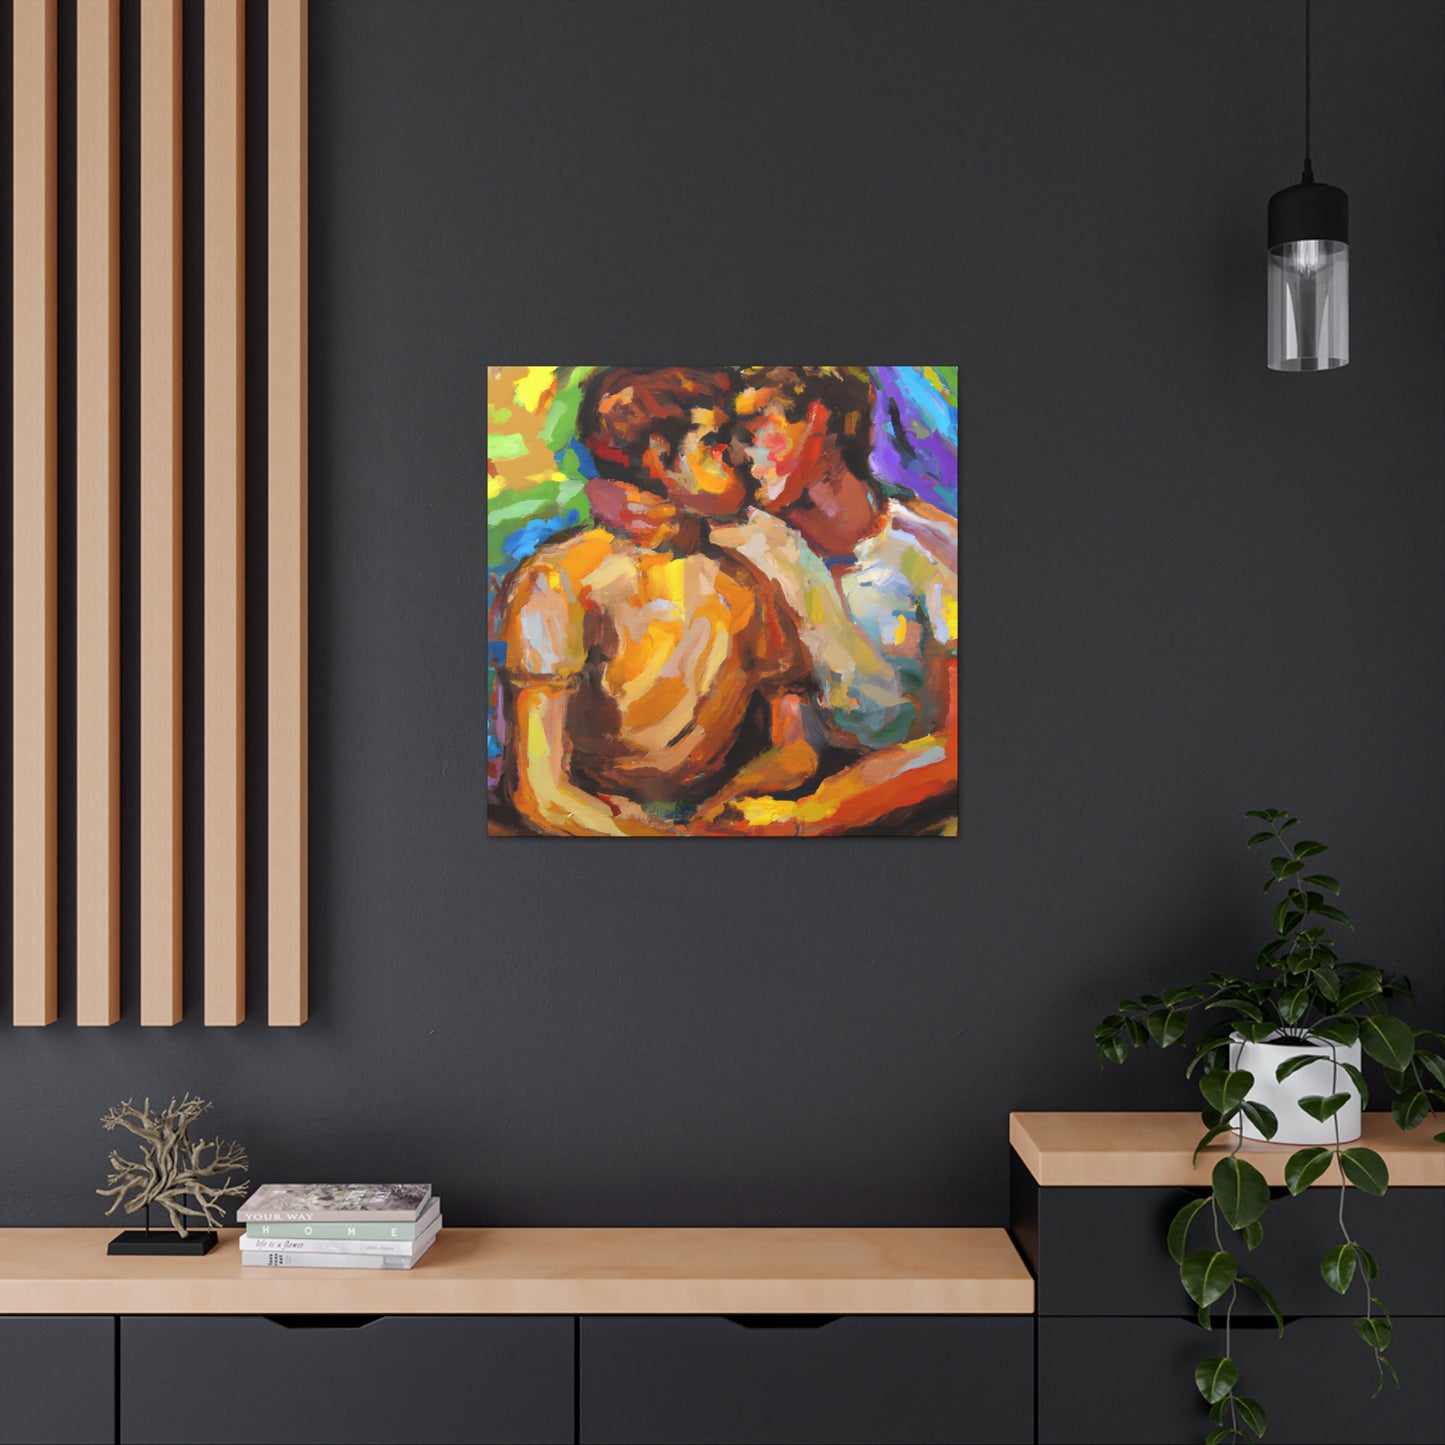 Maxwell - Gay Love Canvas Art